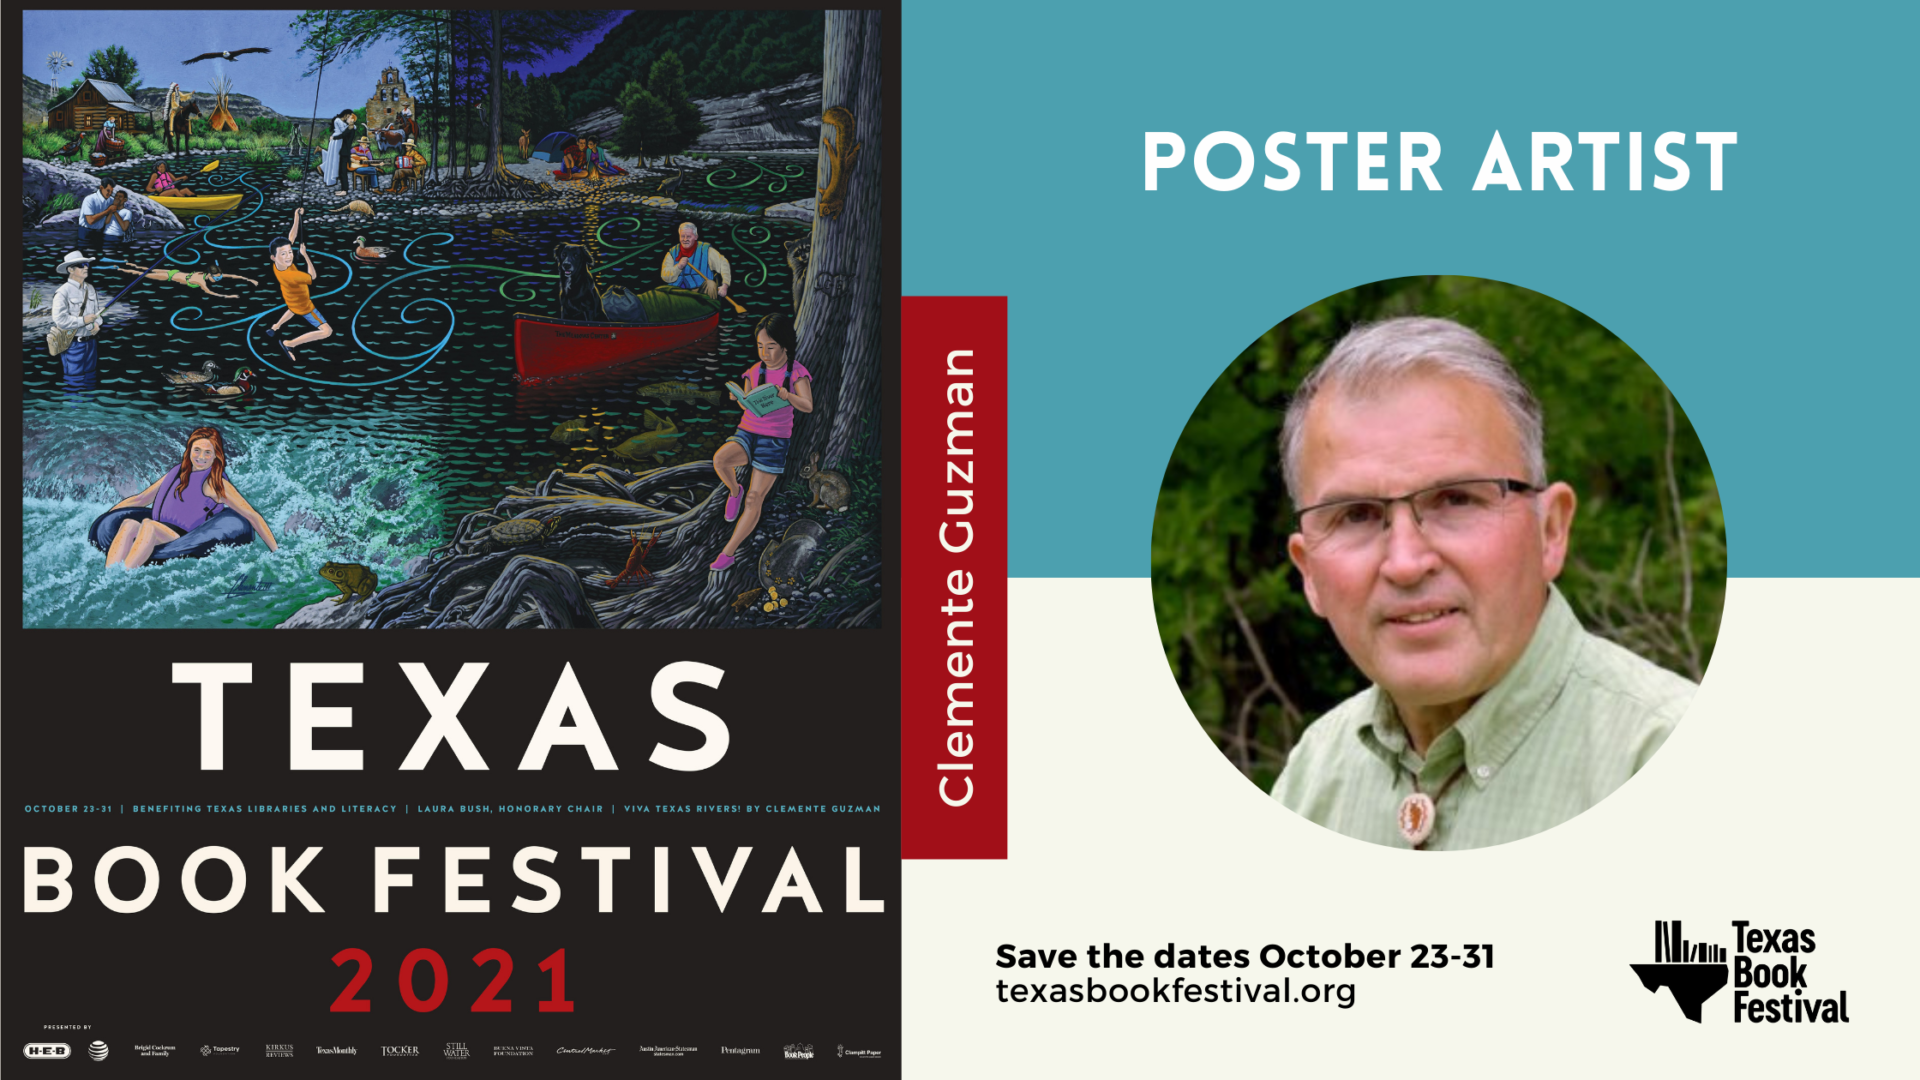 Announcing the 2021 Texas Book Festival poster artist